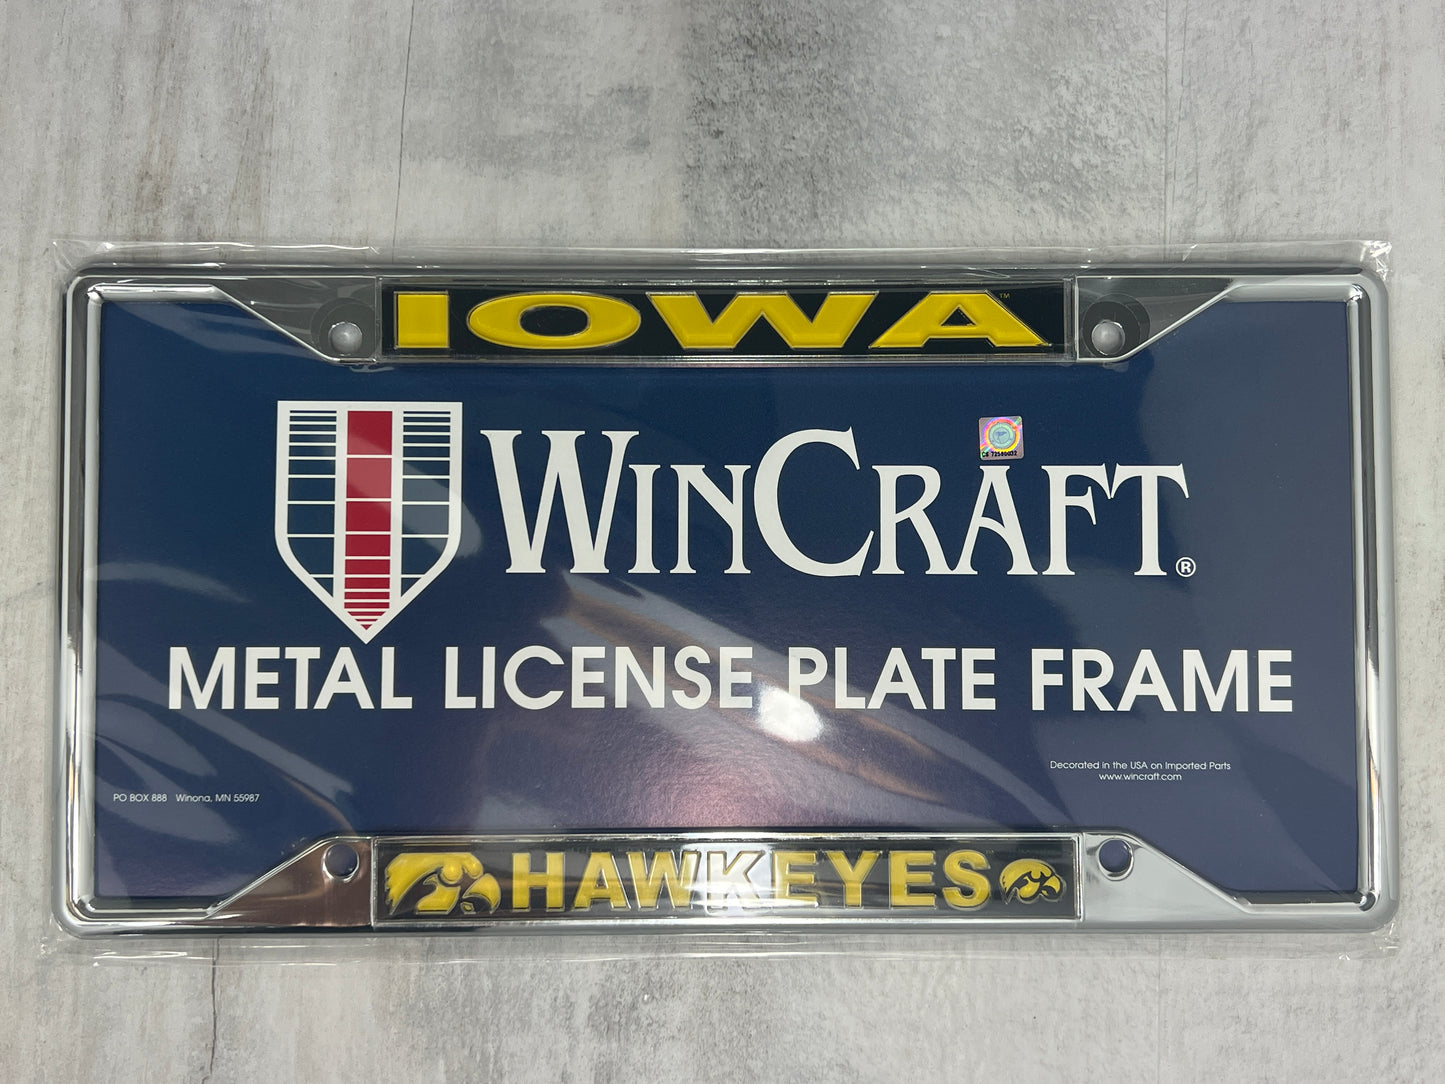 Collegiate License Plate Frame